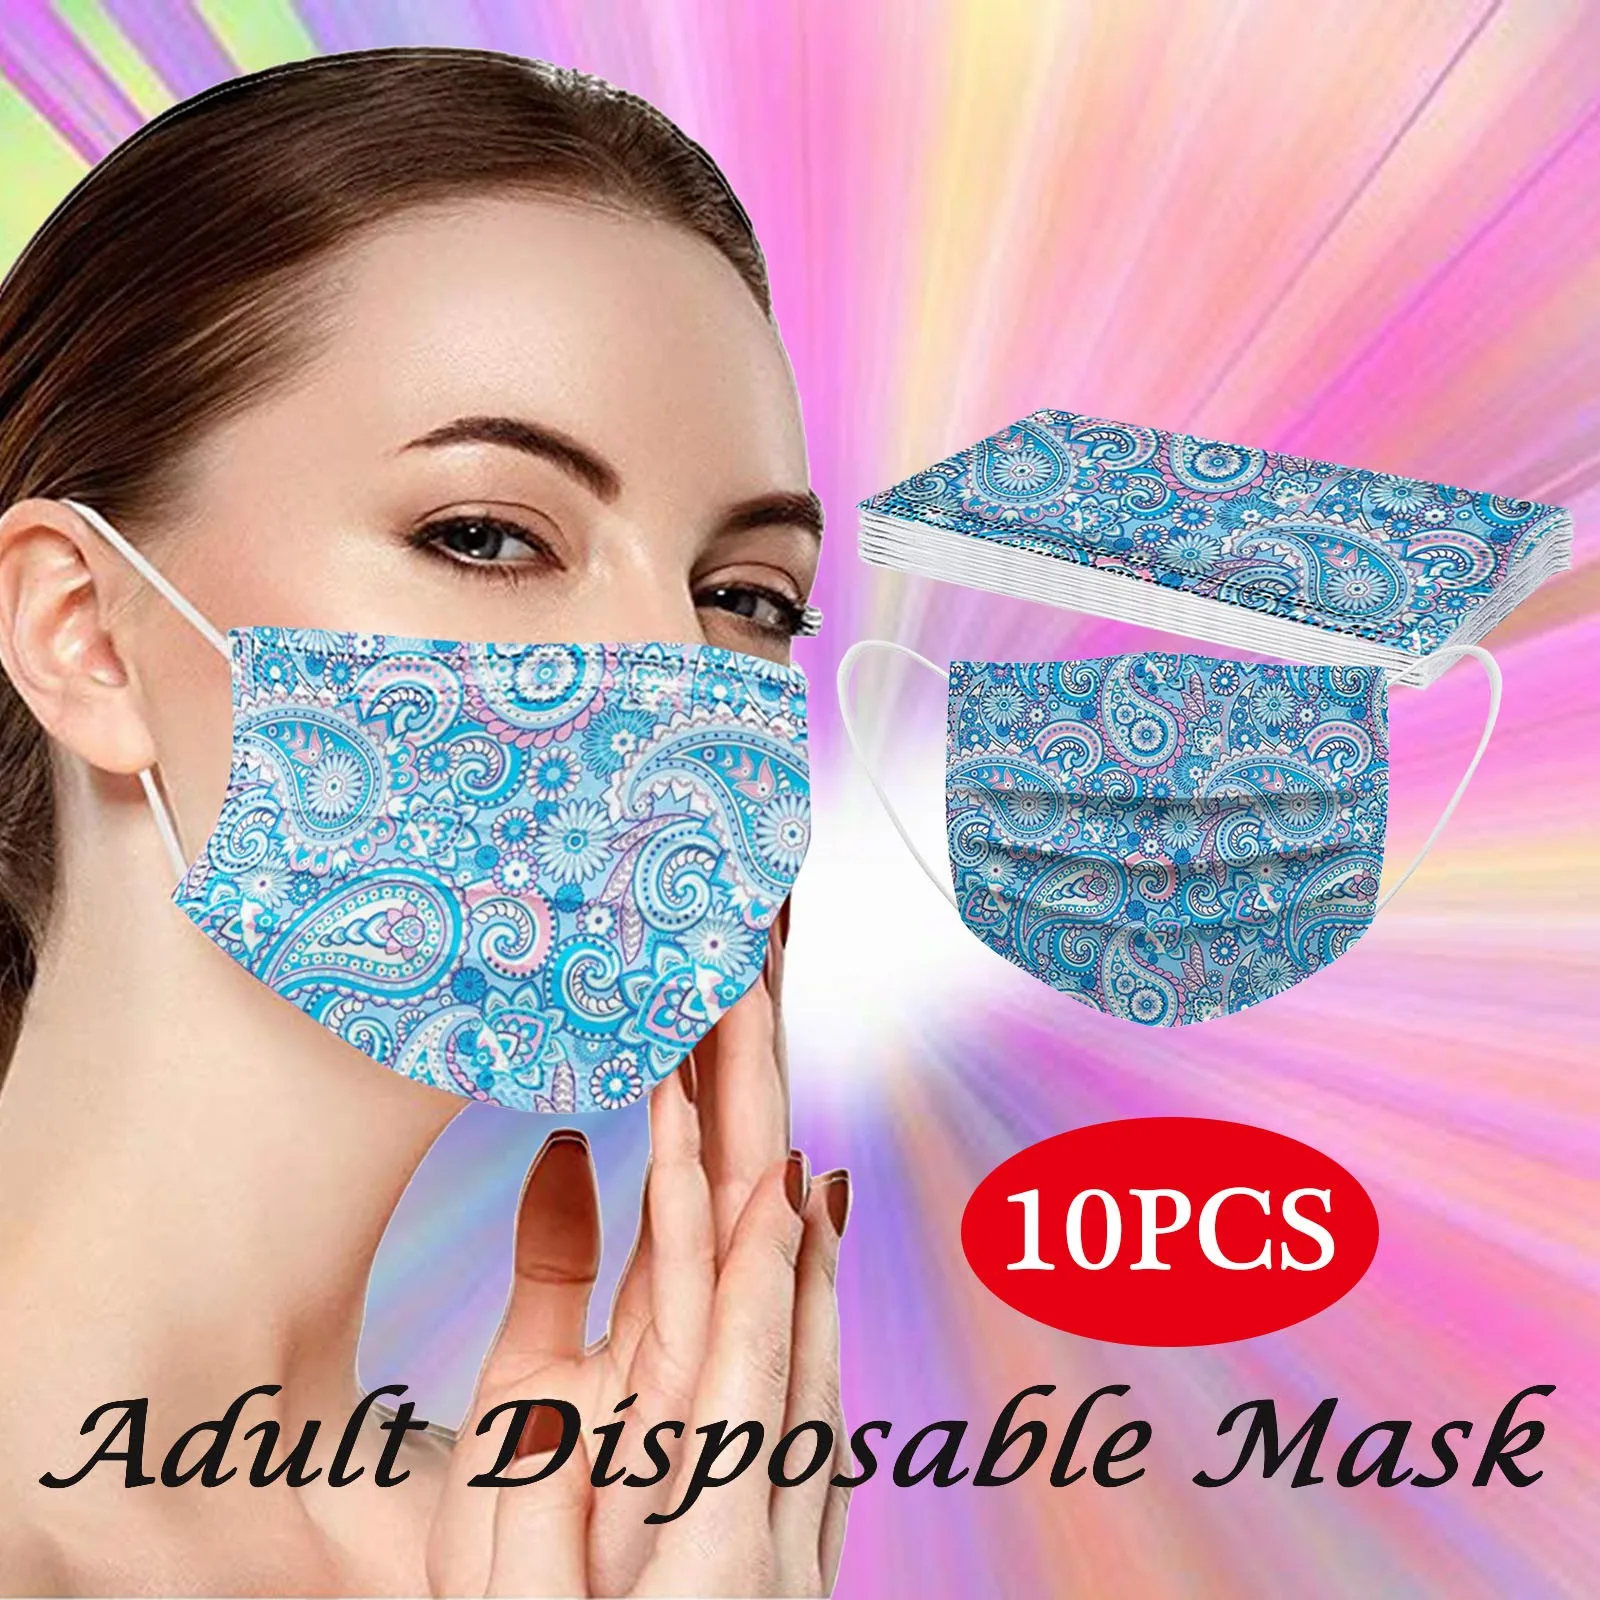 10PCS Disposable Adult's Masks Paisley Printed Mouth Mask With Design Mascarillas Higienicas Homologadas Mascarillas Antivirales